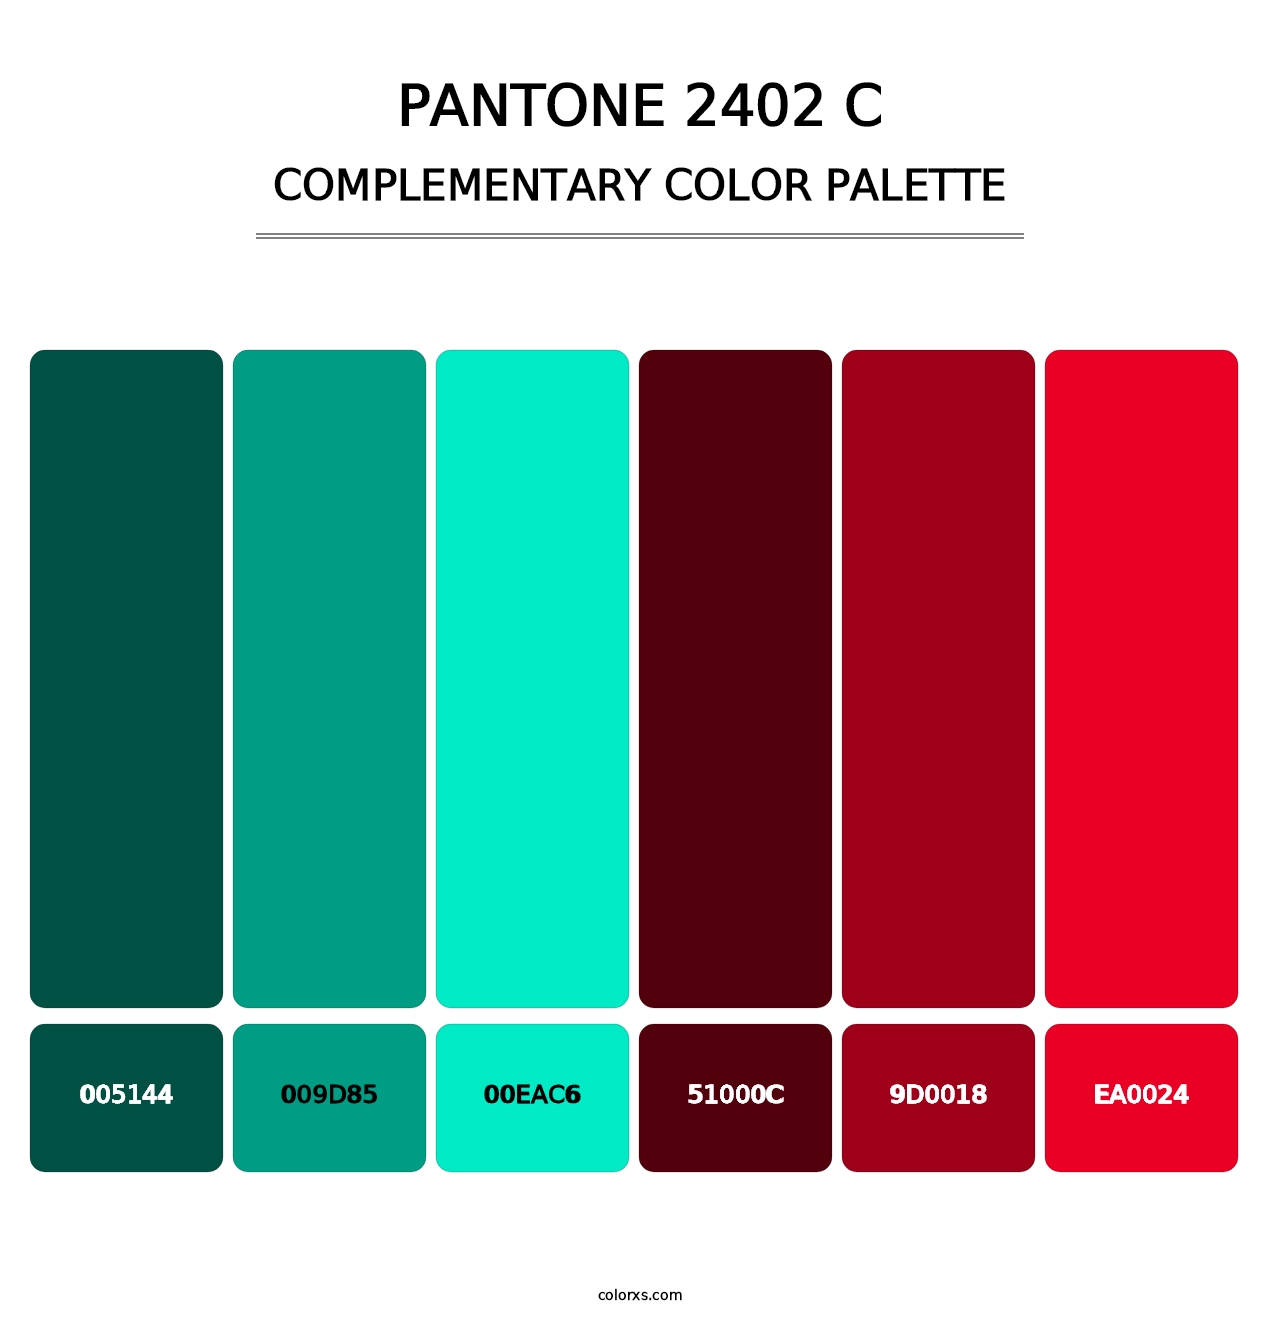 PANTONE 2402 C - Complementary Color Palette